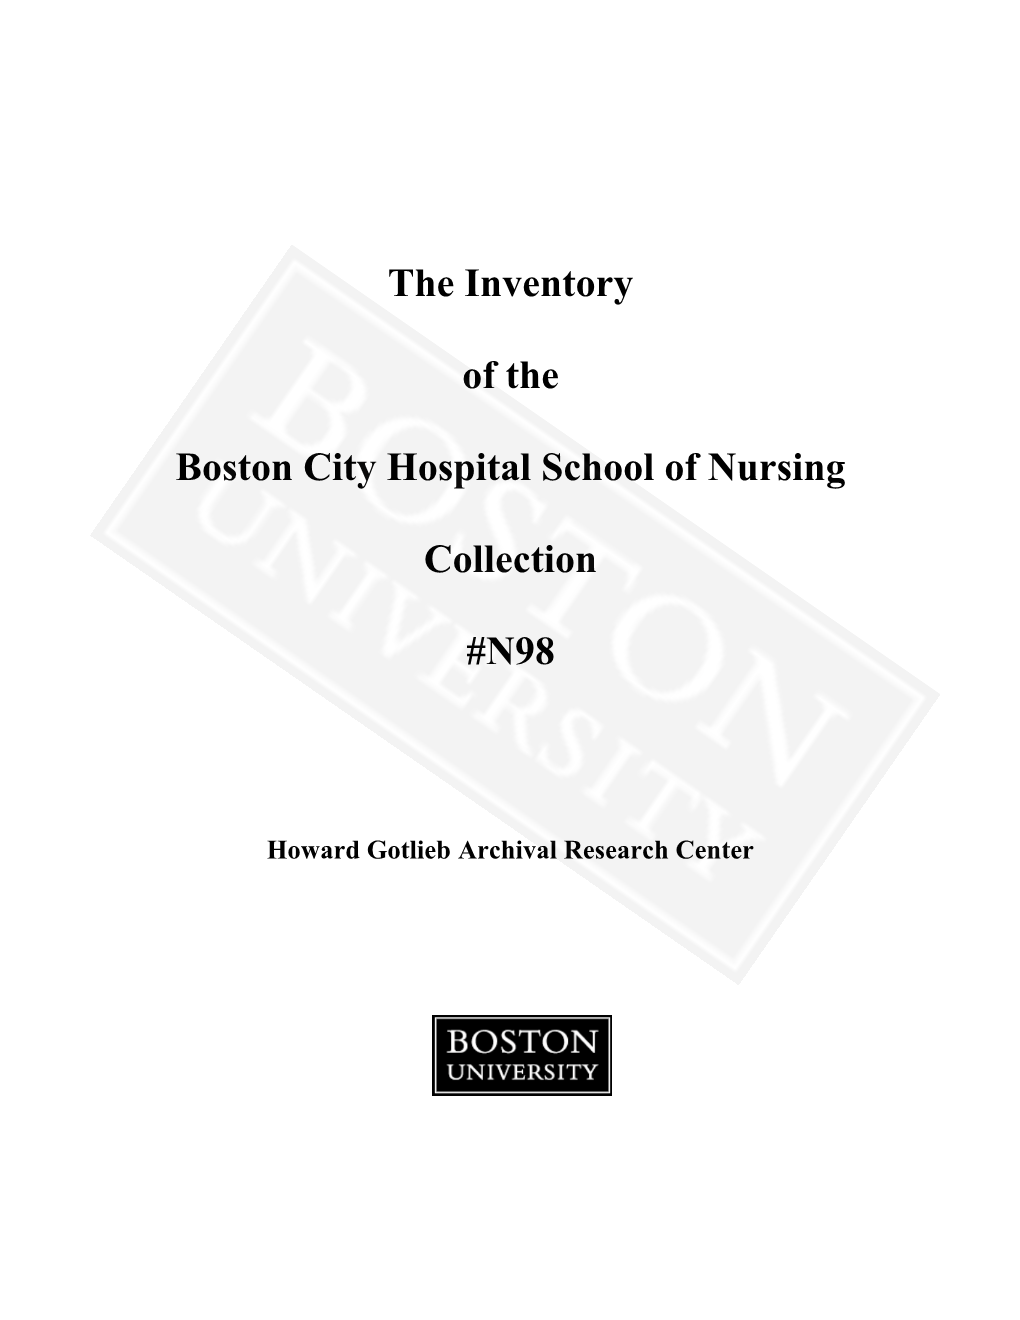 The Inventory of the Boston City Hospital School of Nursing